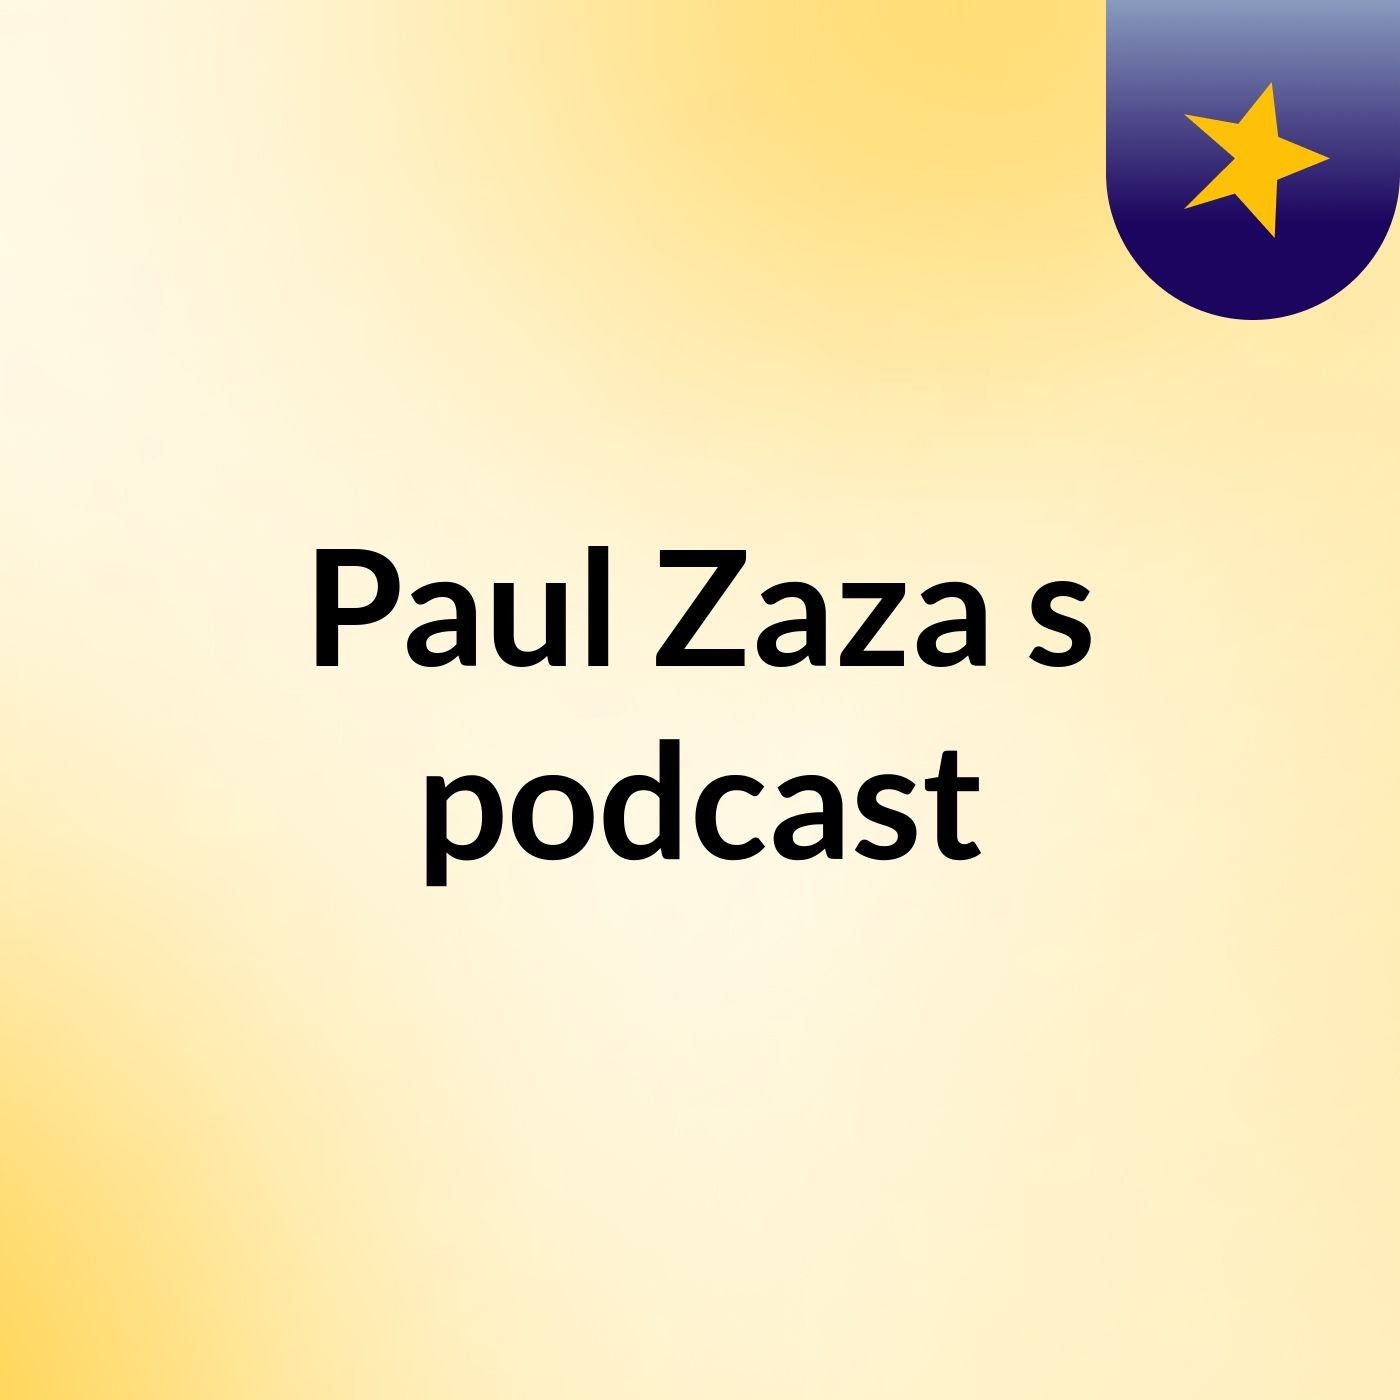 Paul Zaza's podcast